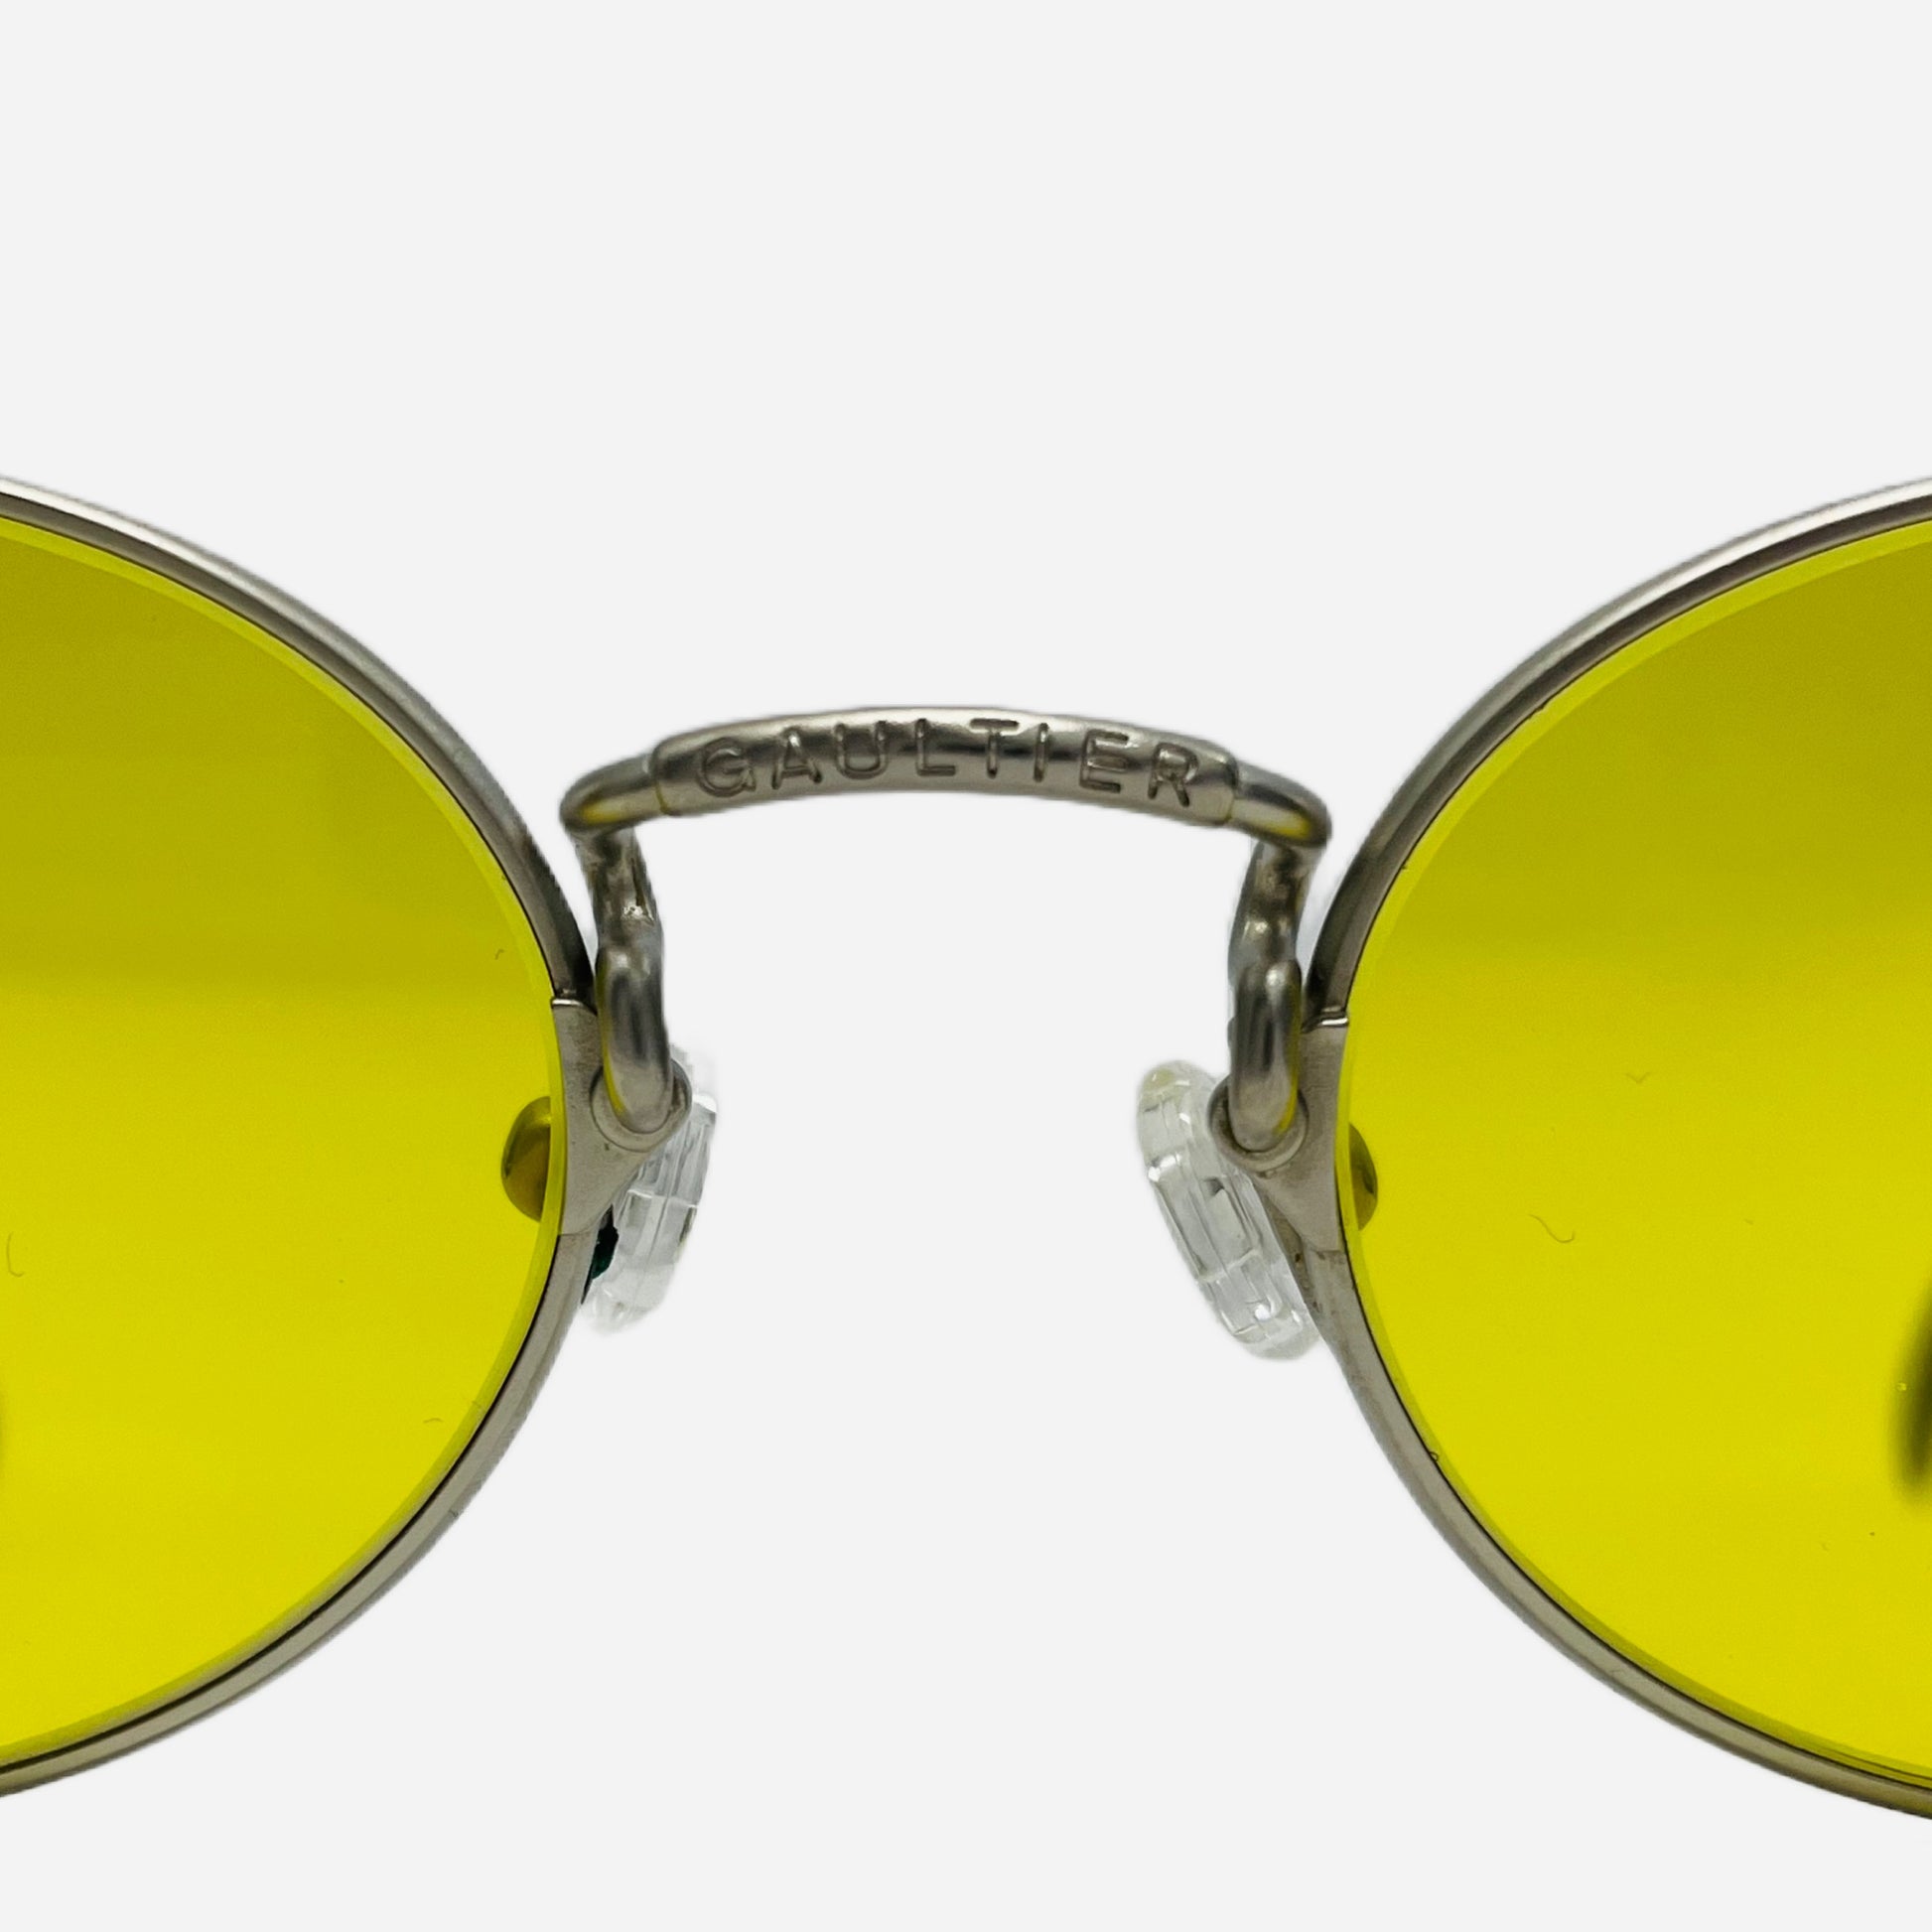 Vintage-Jean-Paul-Gaultier-Sonnenbrille-Sunglasses-Model-55-6108-made-in-japan-the-seekers-detail-jpg-logo